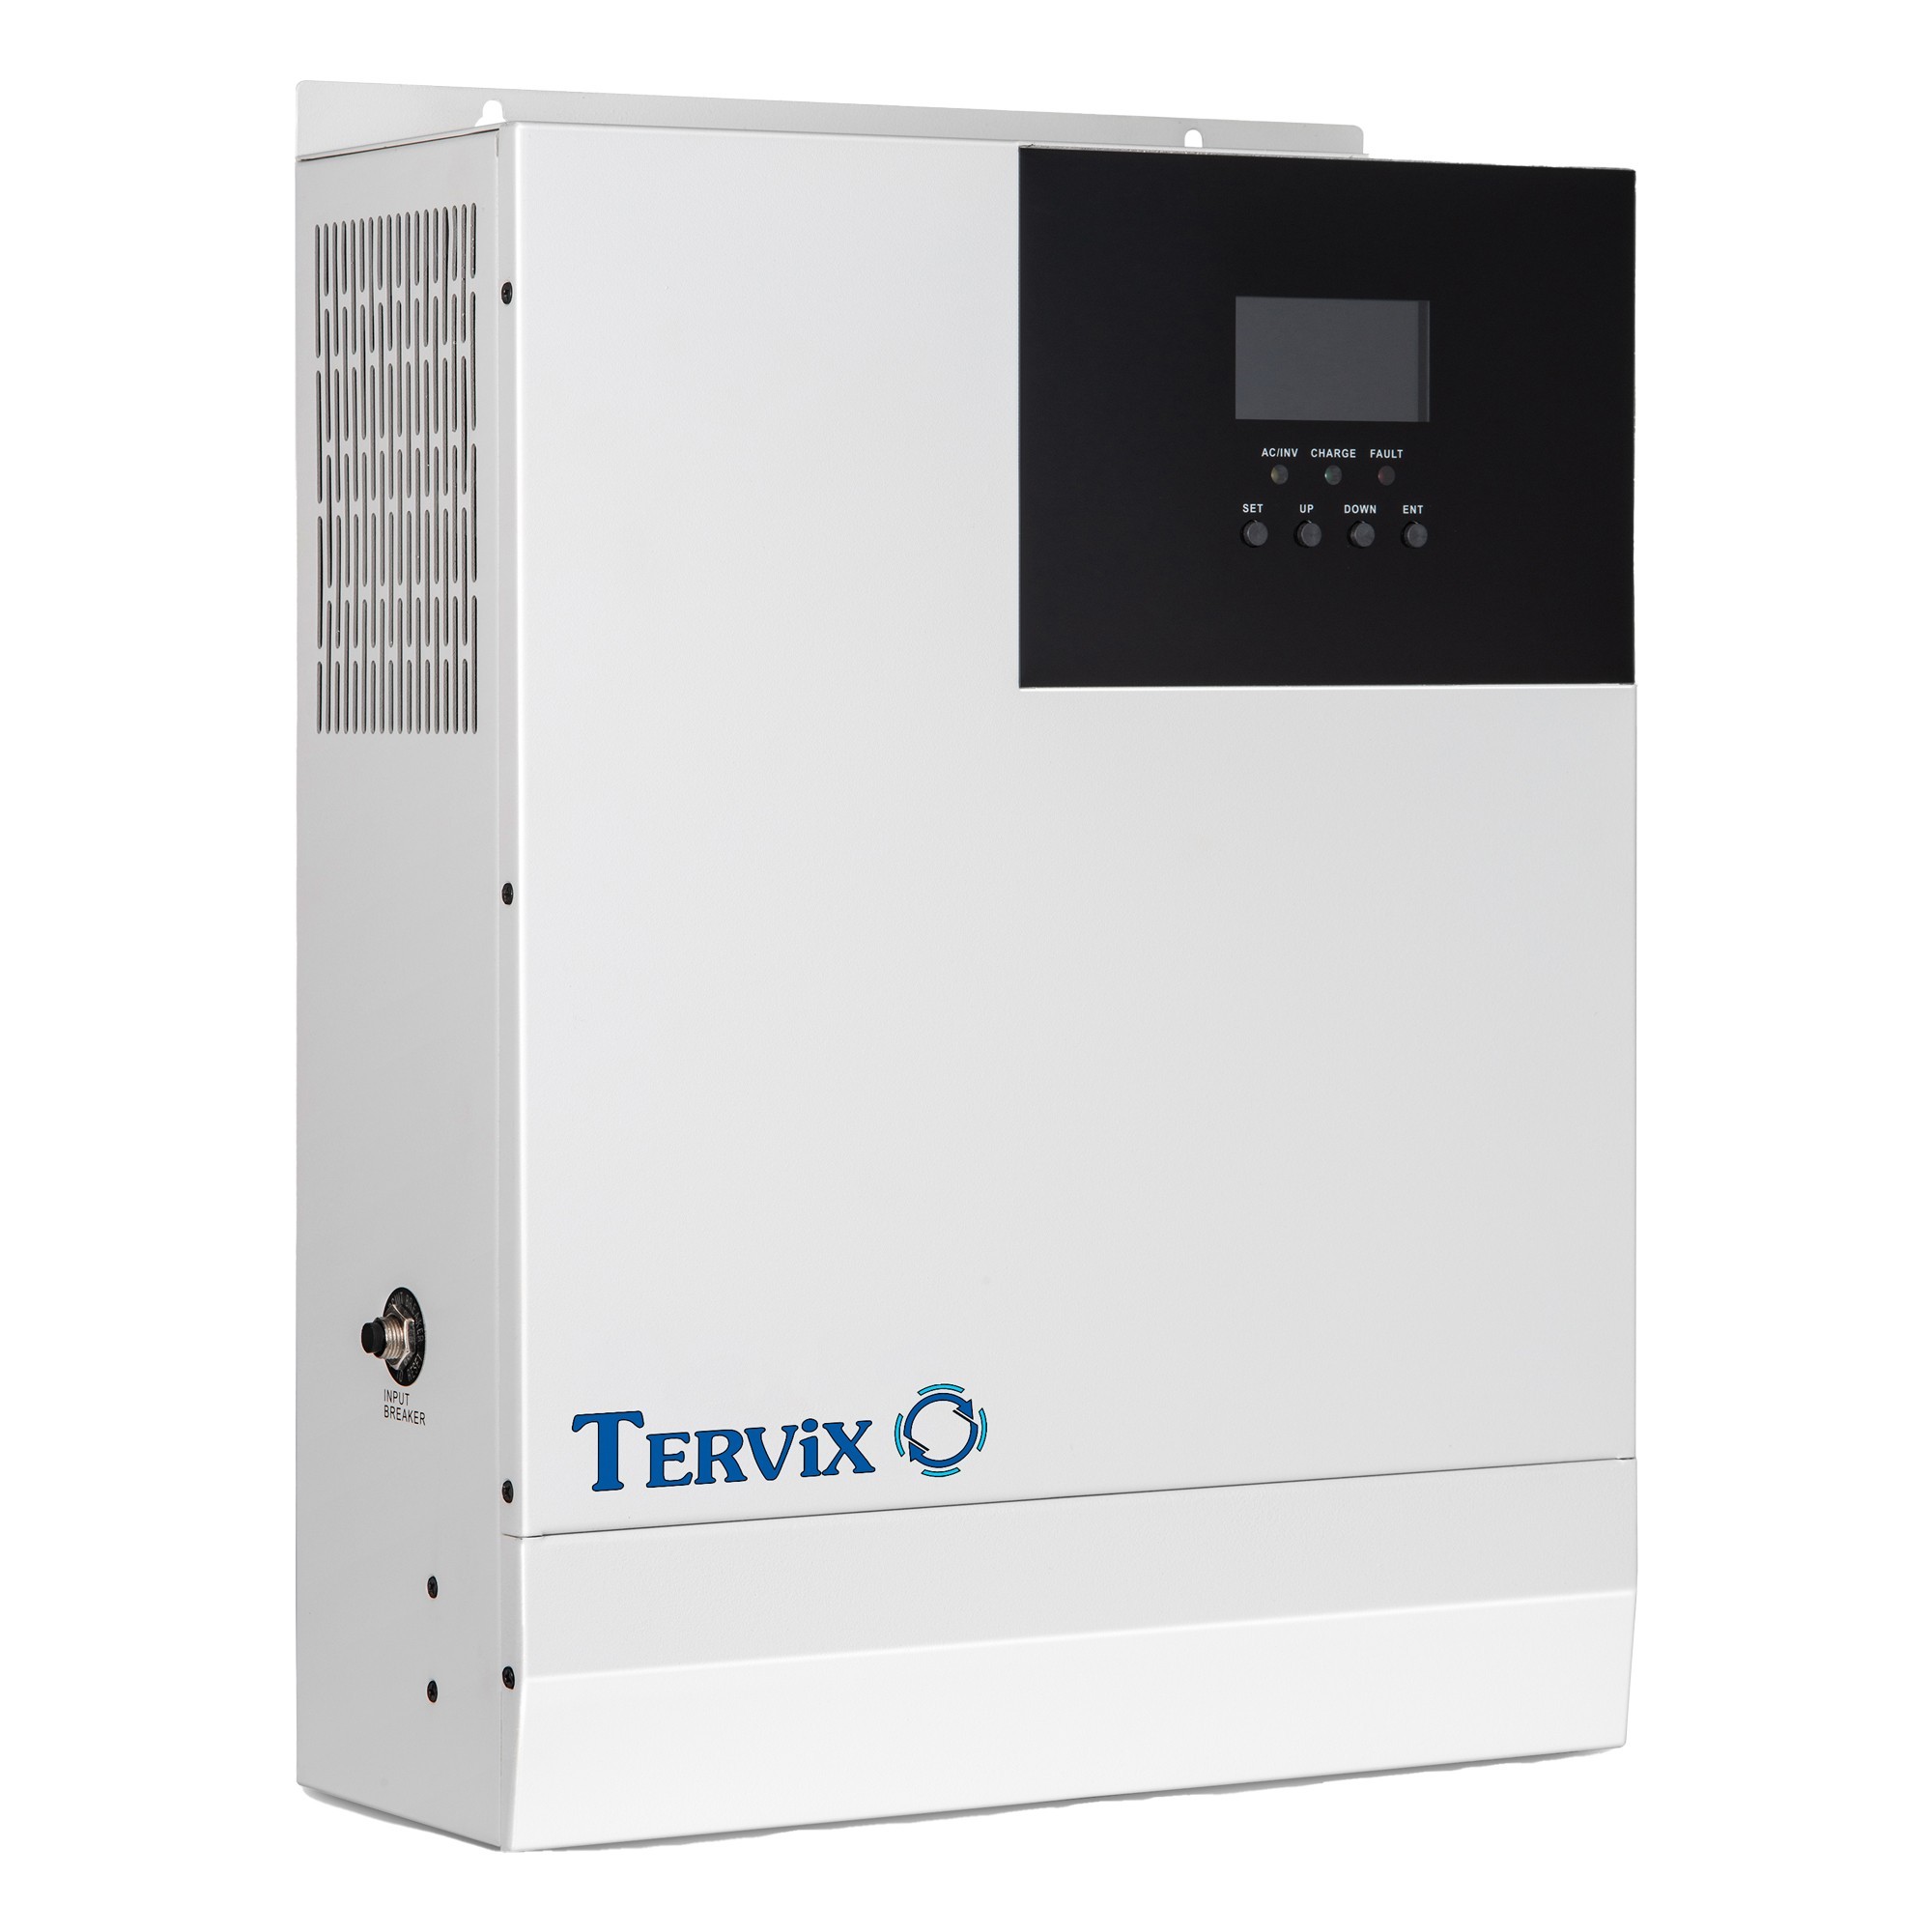 Система автономного питания Tervix BANKA 10,2 кВтч - инвертор 5кВт + аккумулятор 51,2В 100 Ач (2 шт) 693620 цена 188000.00 грн - фотография 2